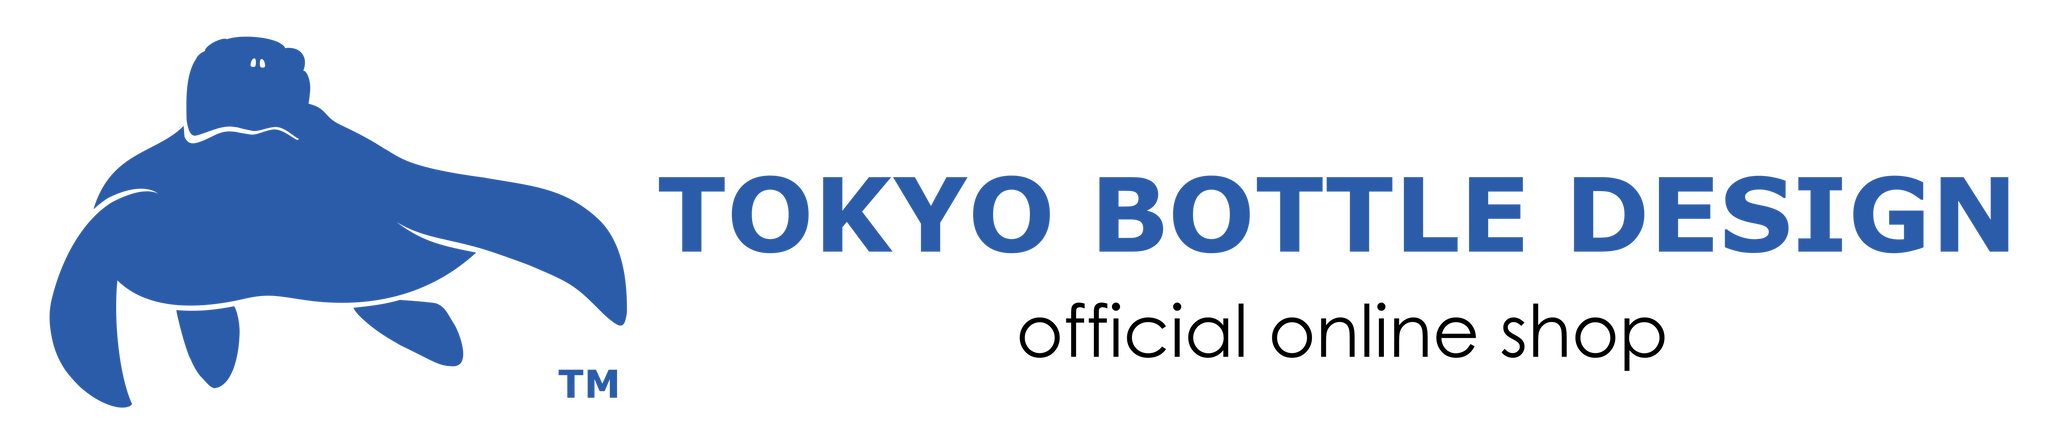 TOKYO BOTTLE DESIGN